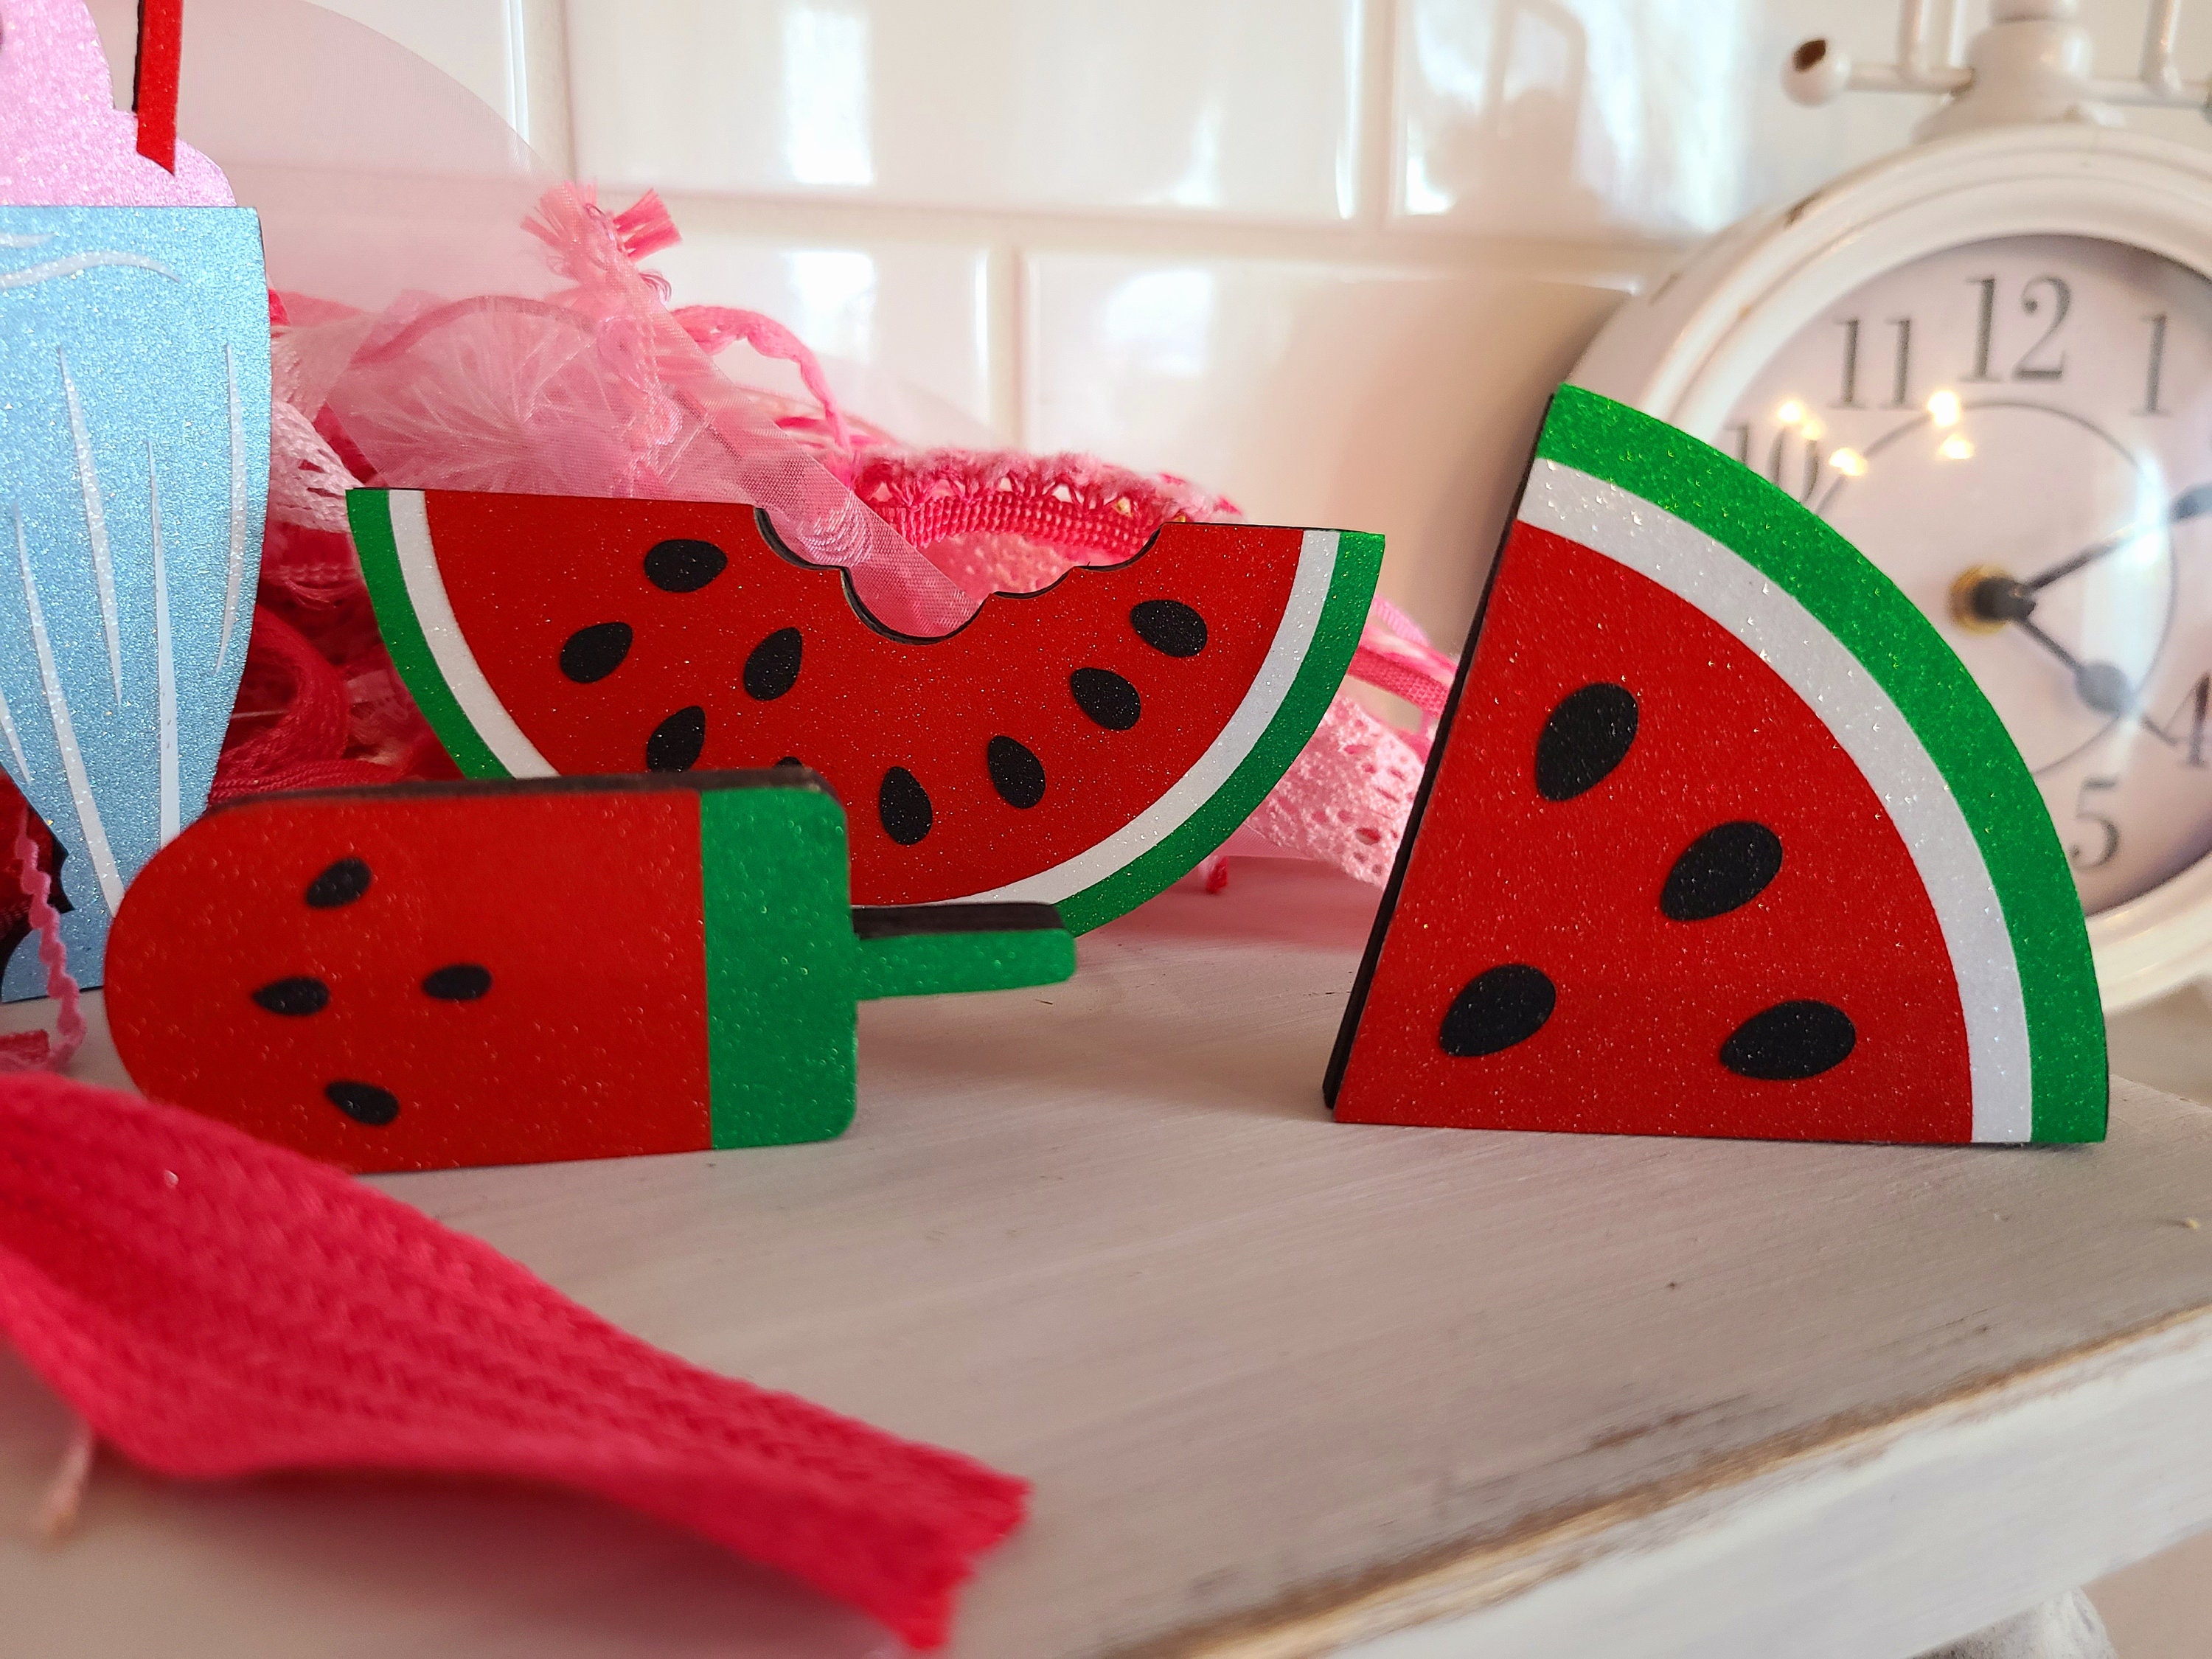 Summer Fun Watermelon Stackable Circle Easel Kit, Engraved DIY Craft Decor  Set WS 